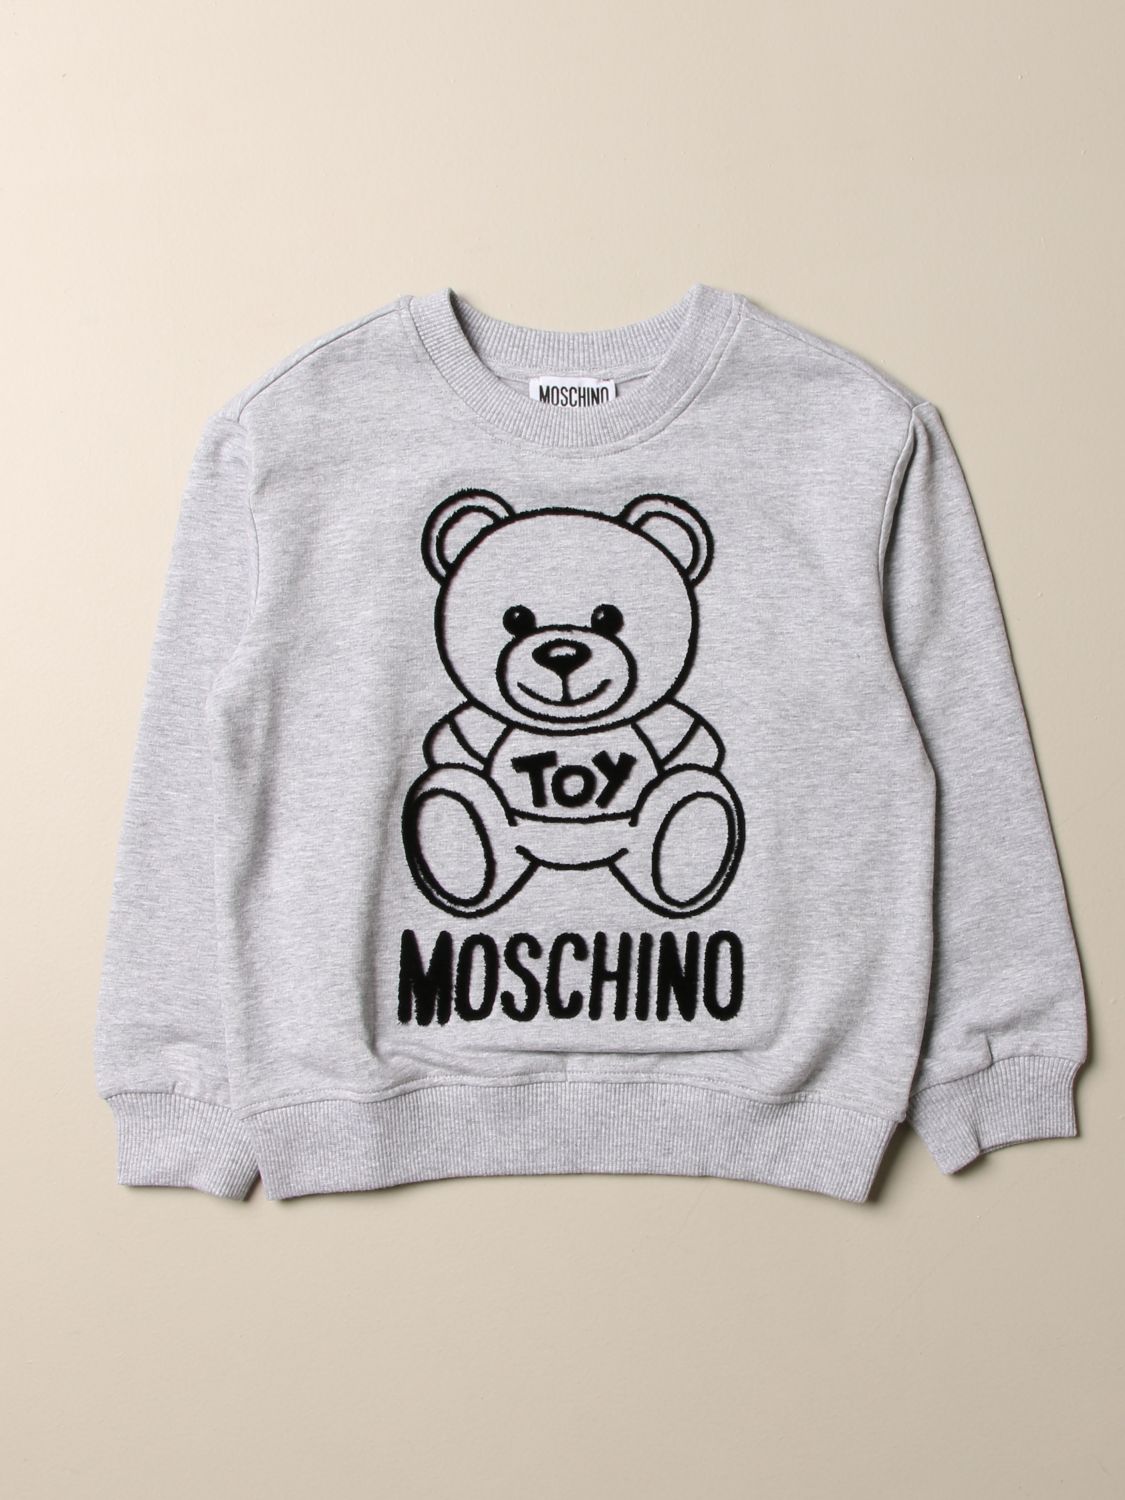 moschino grey sweater